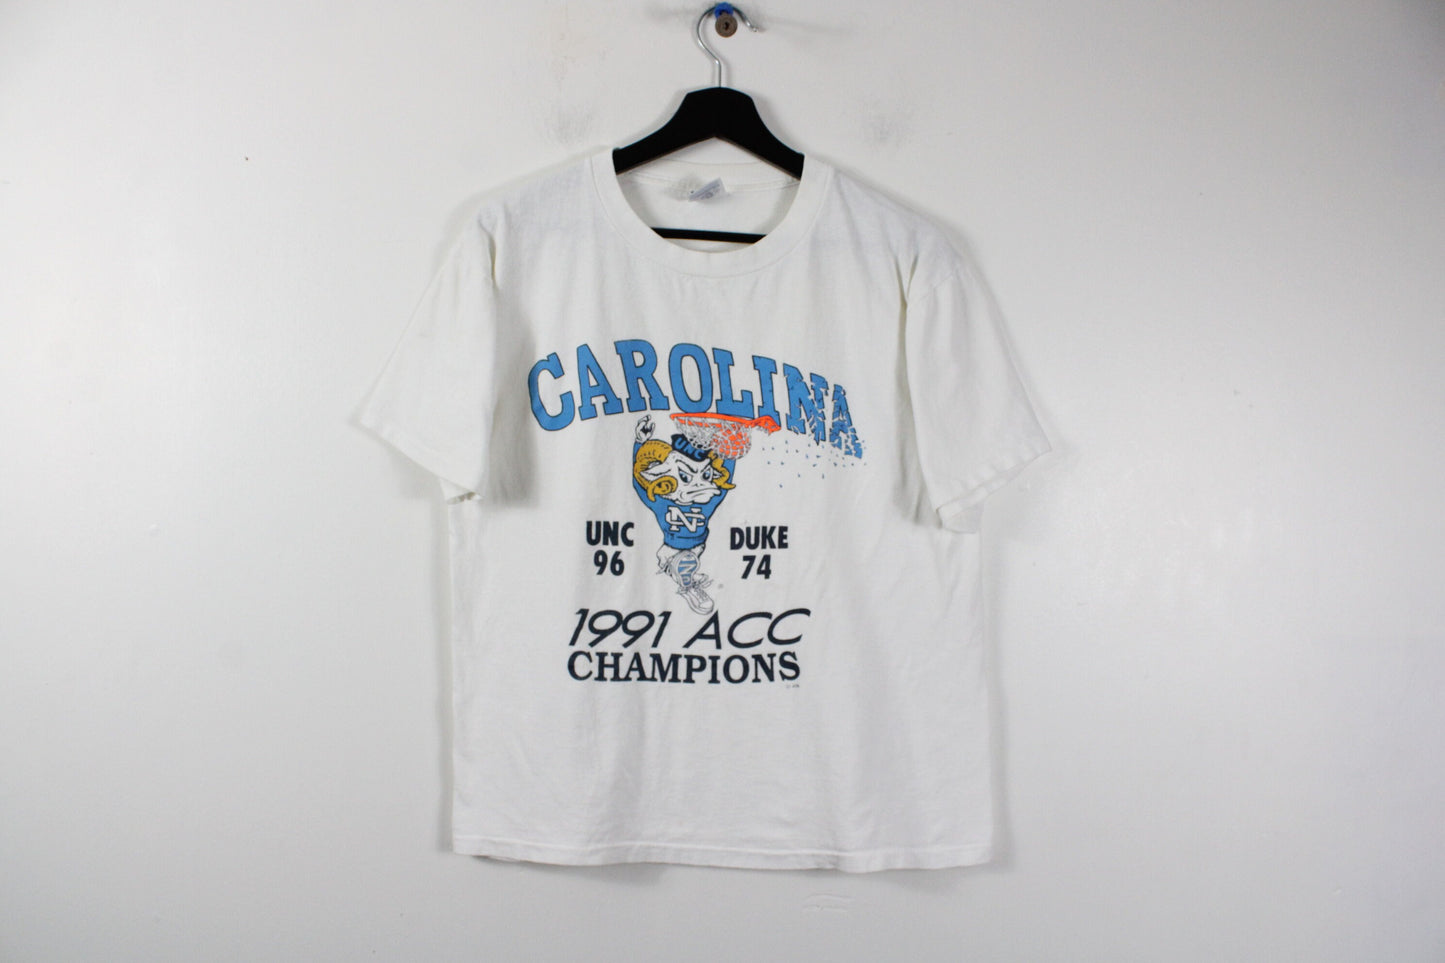 Carolina-State-Tar-Heels T-Shirt / Vintage UNC NCAA Graphic Tee Shirt / 90s / 2000s Sports-Team Clothing